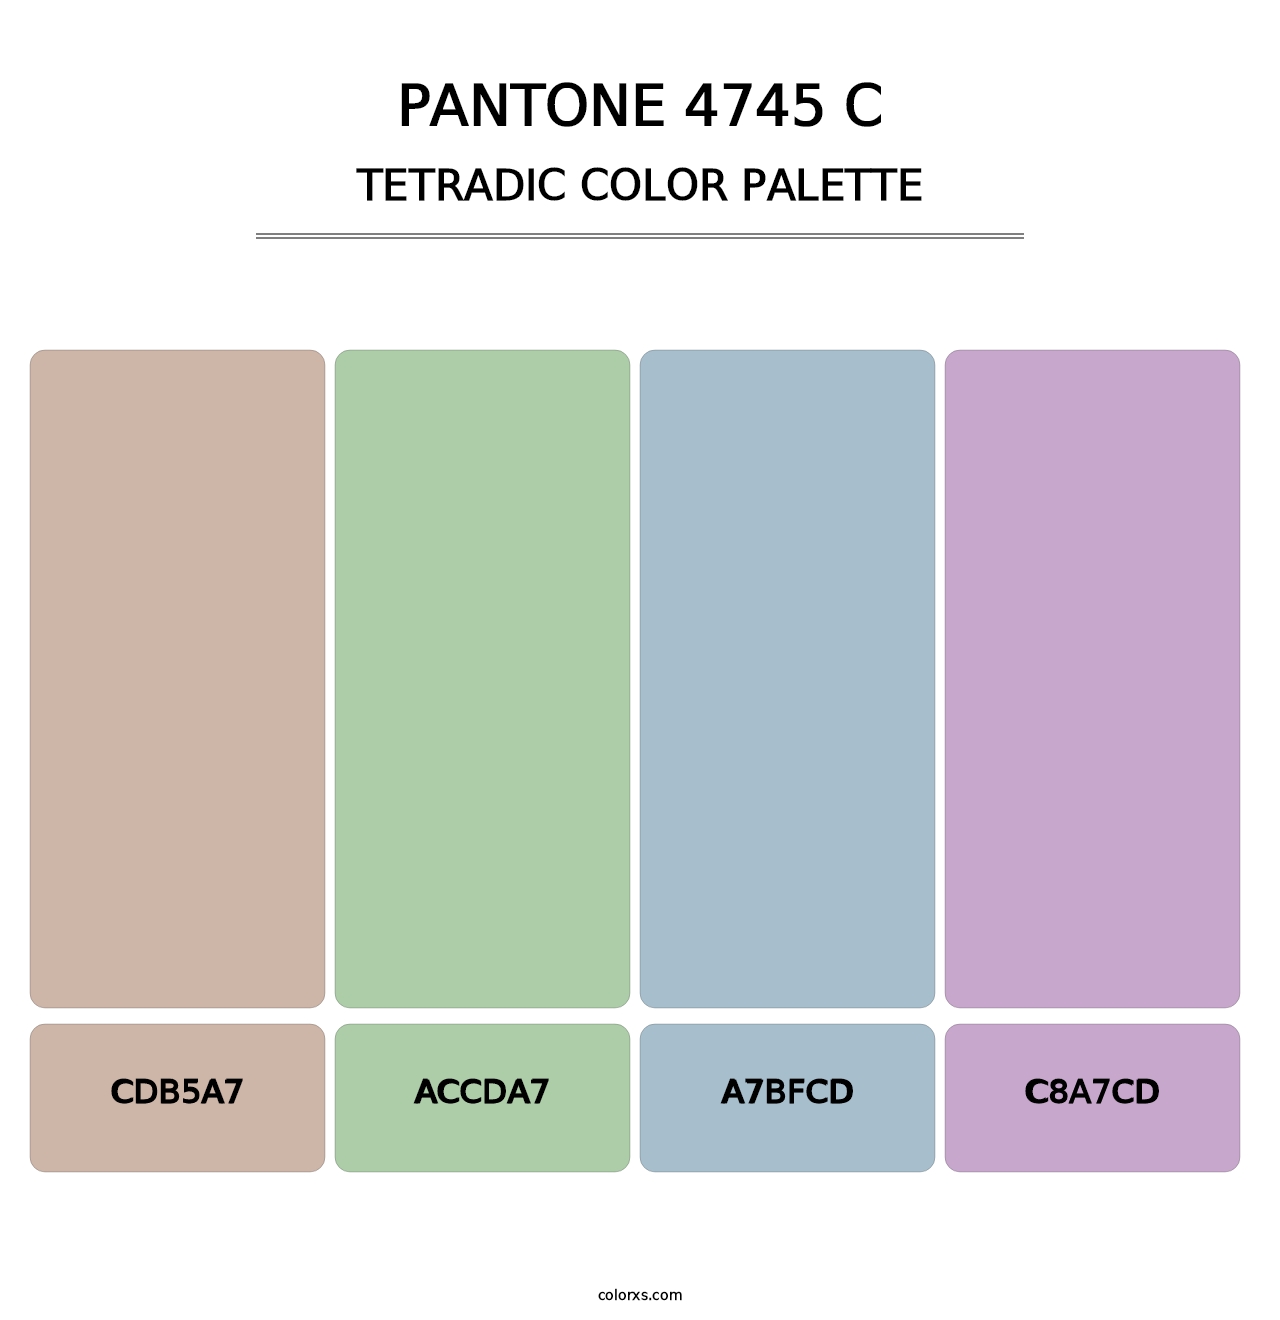 PANTONE 4745 C - Tetradic Color Palette